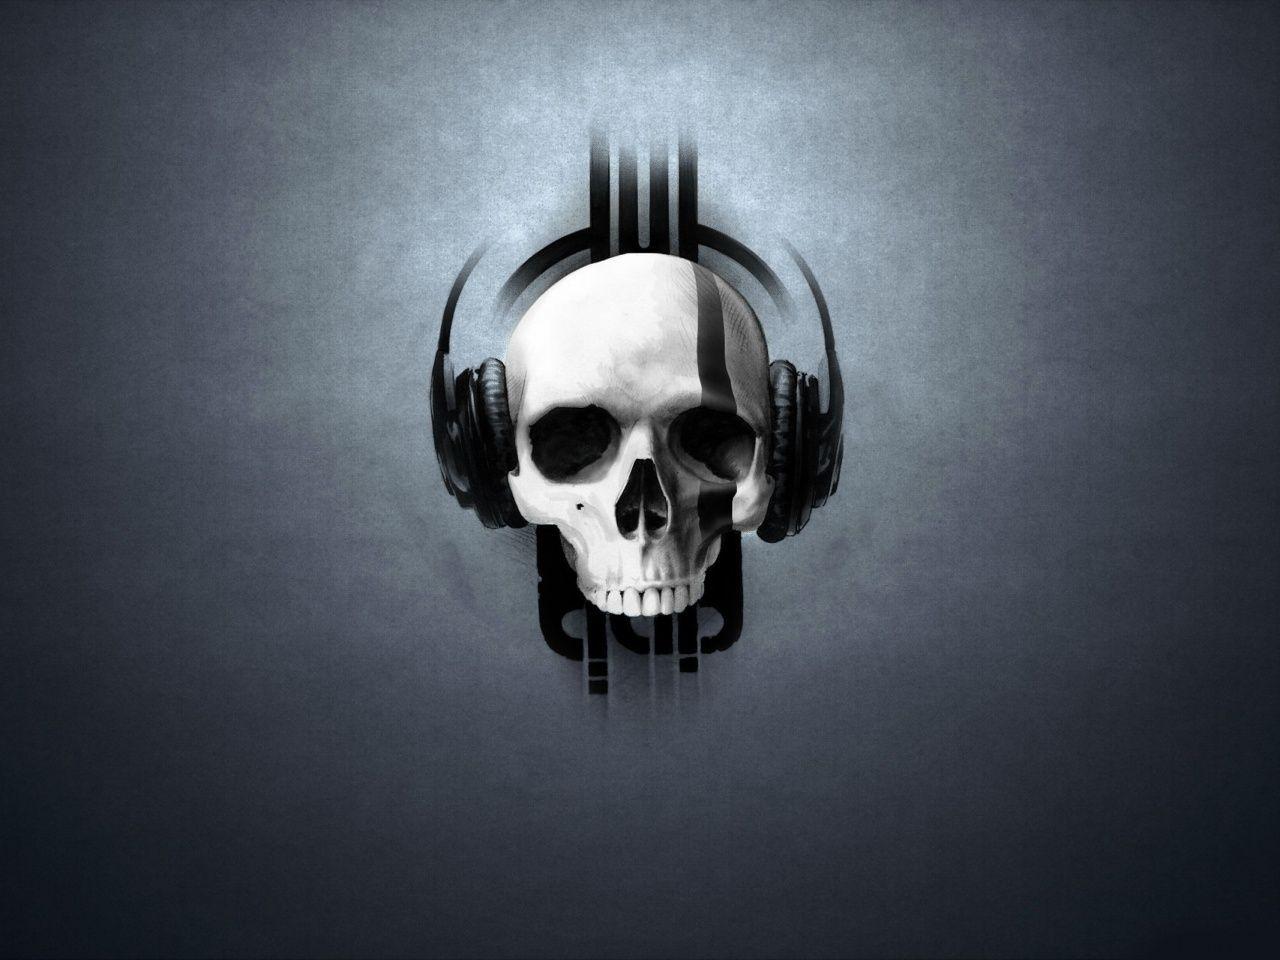 Skull with Headphones Wallpaper Free Skull